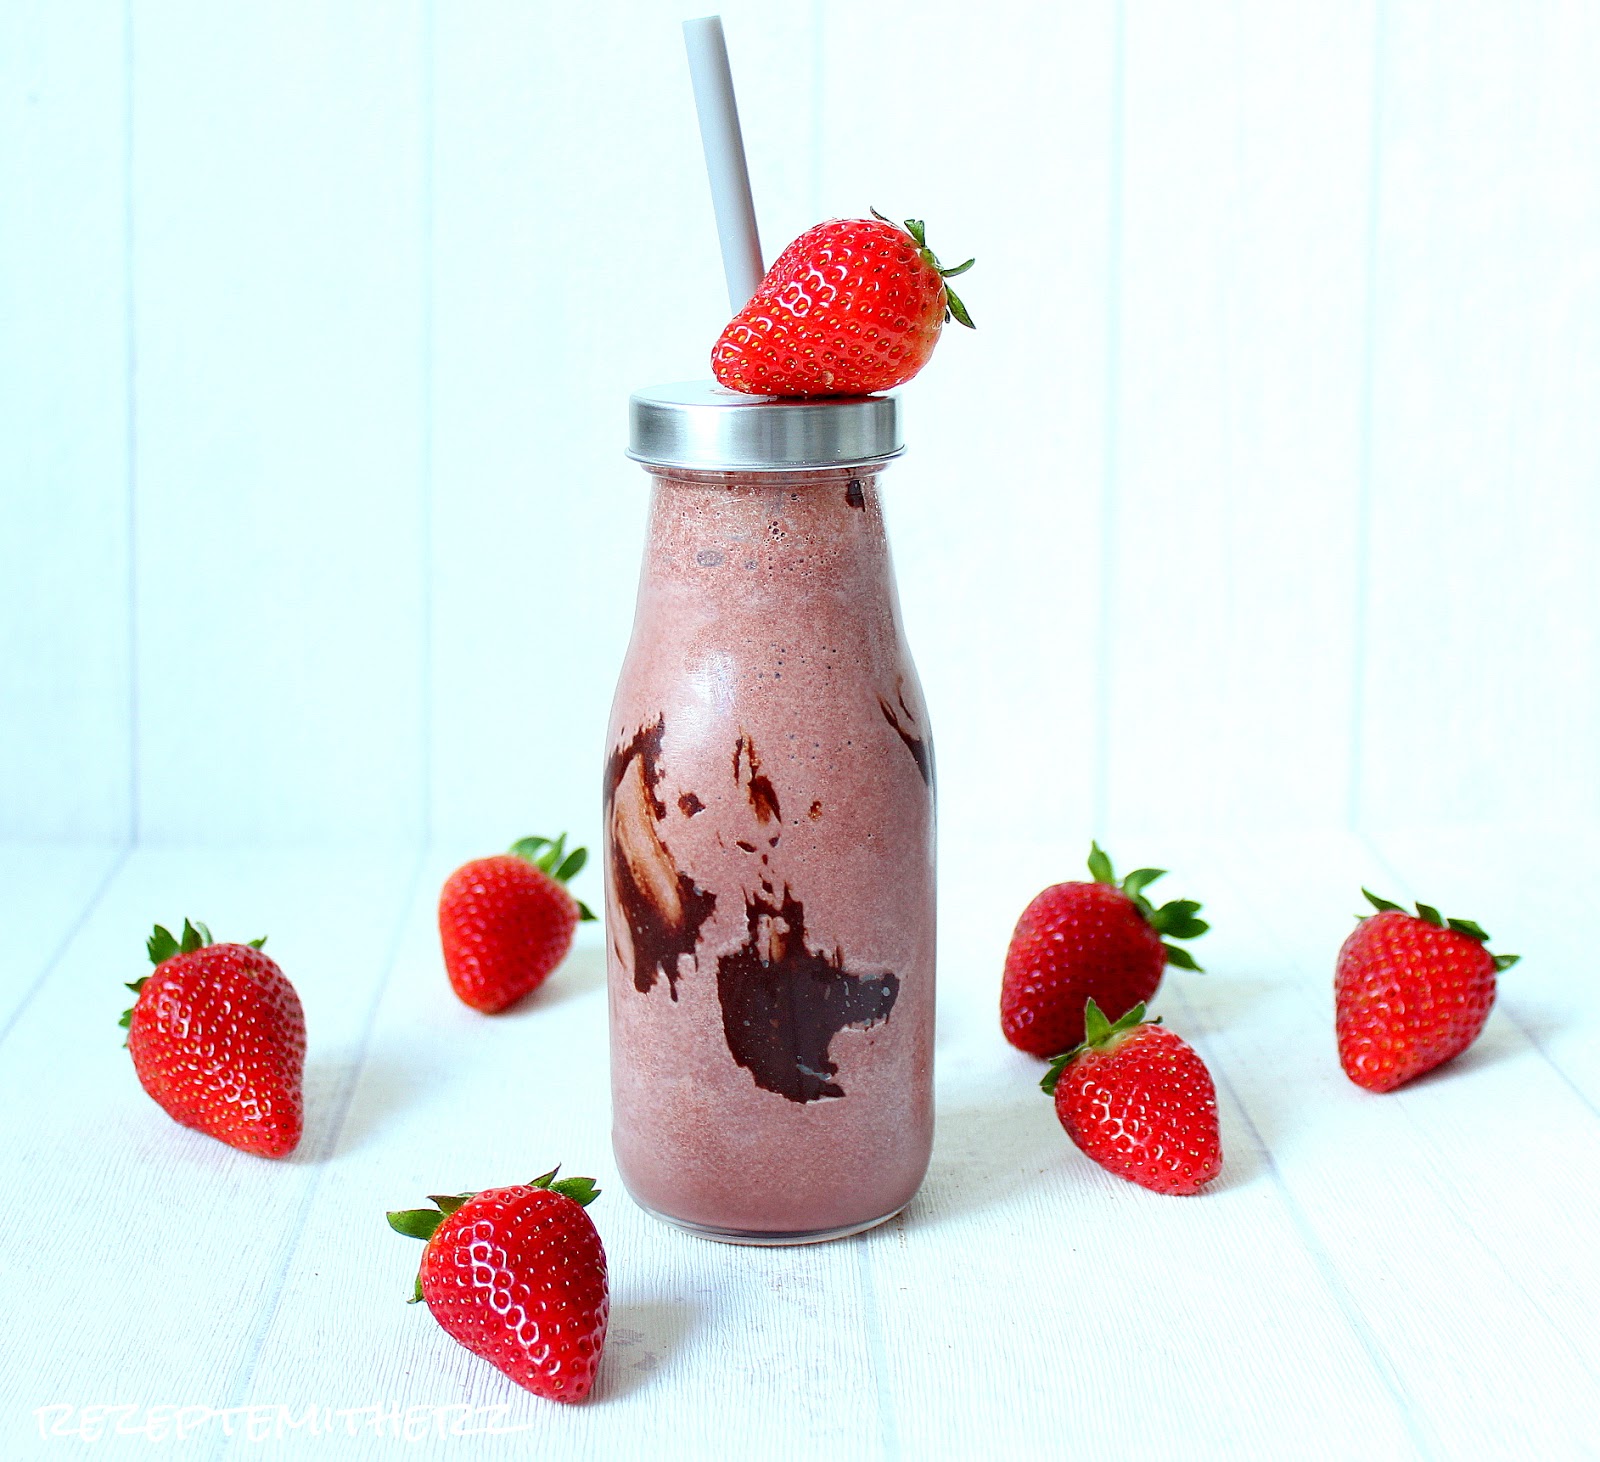 Rezepte mit Herz: Healthy Schoko - Erdbeer - Smoothie